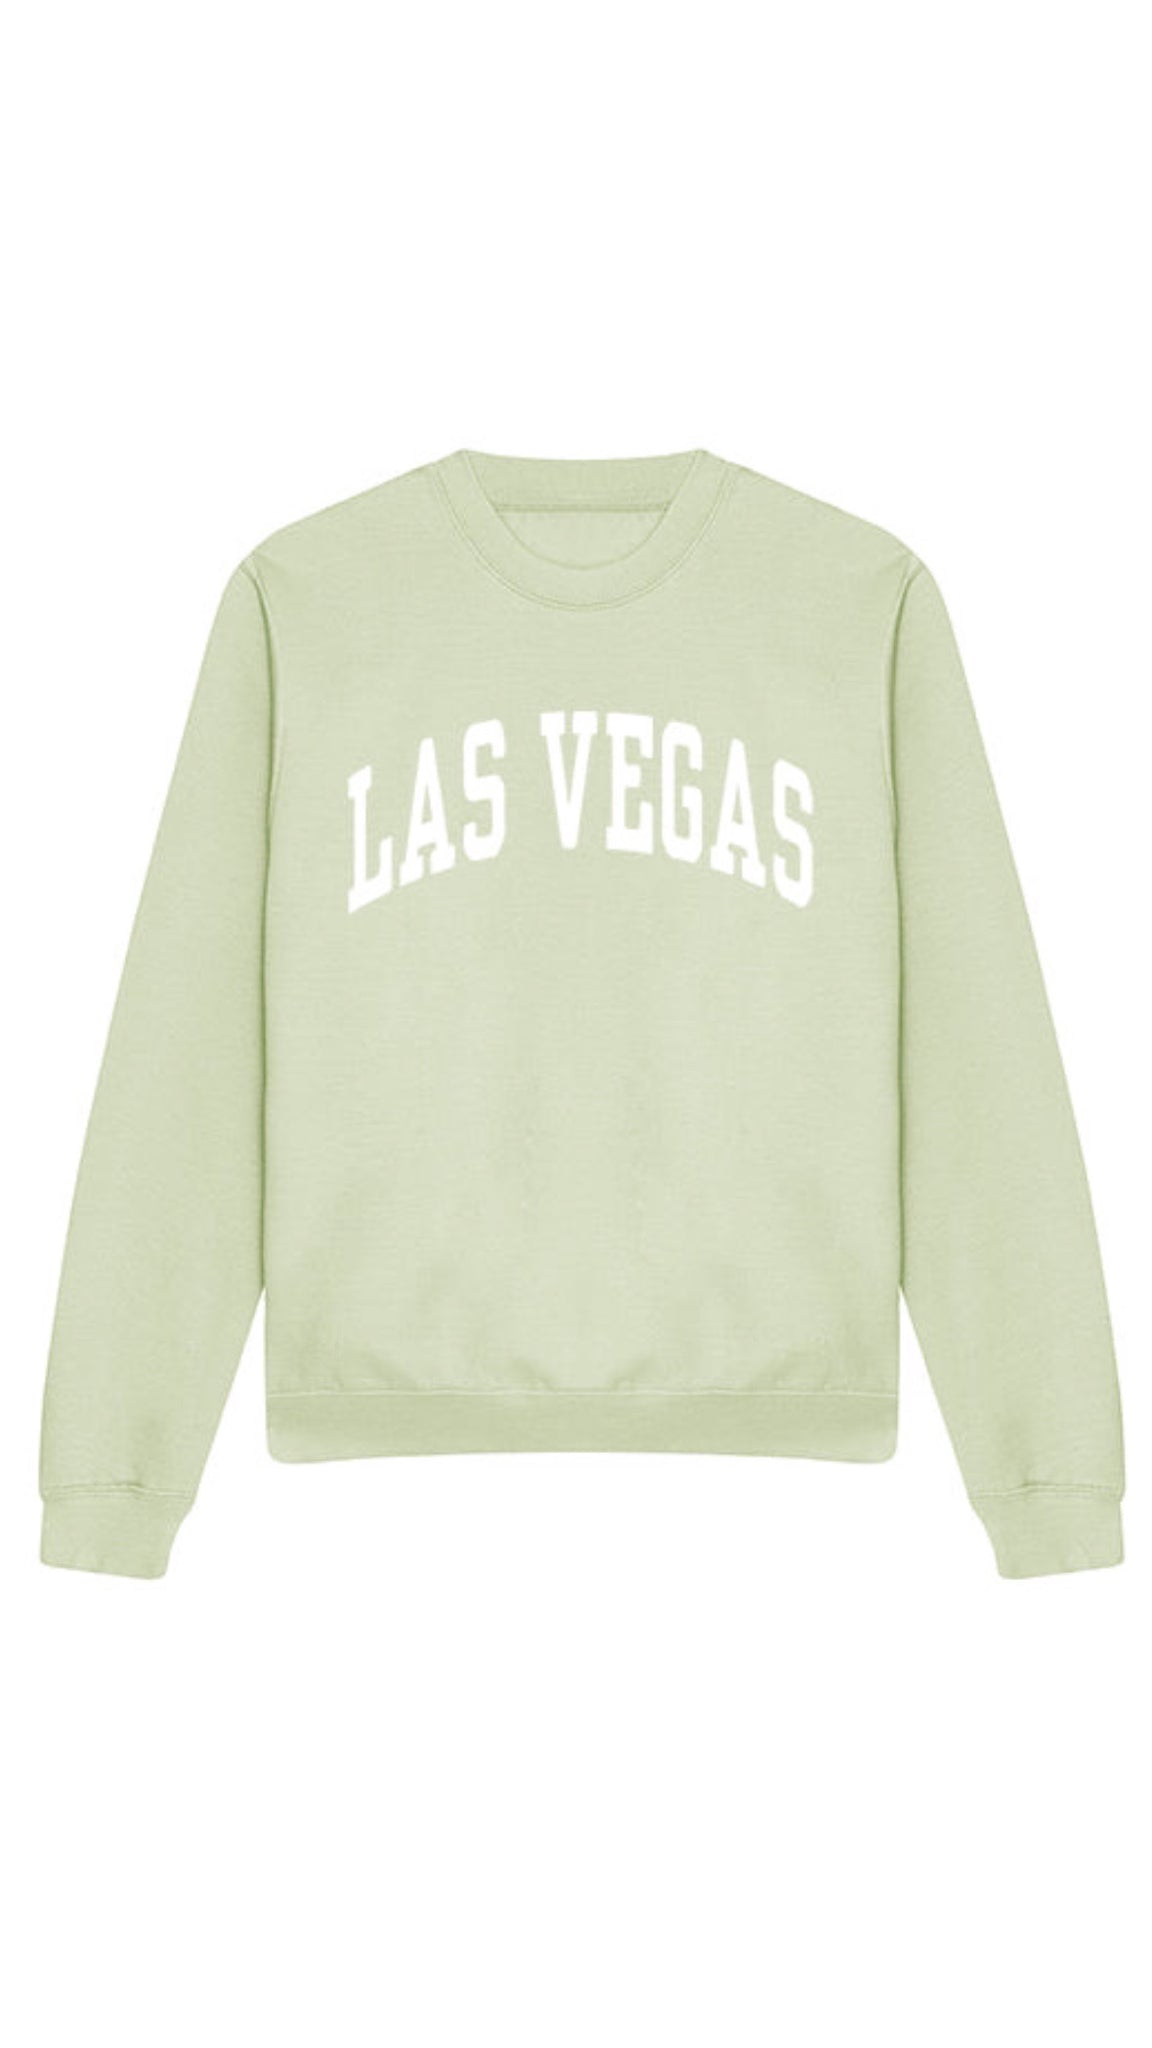 Las Vegas Oversized Sweatshirt in Pistachio